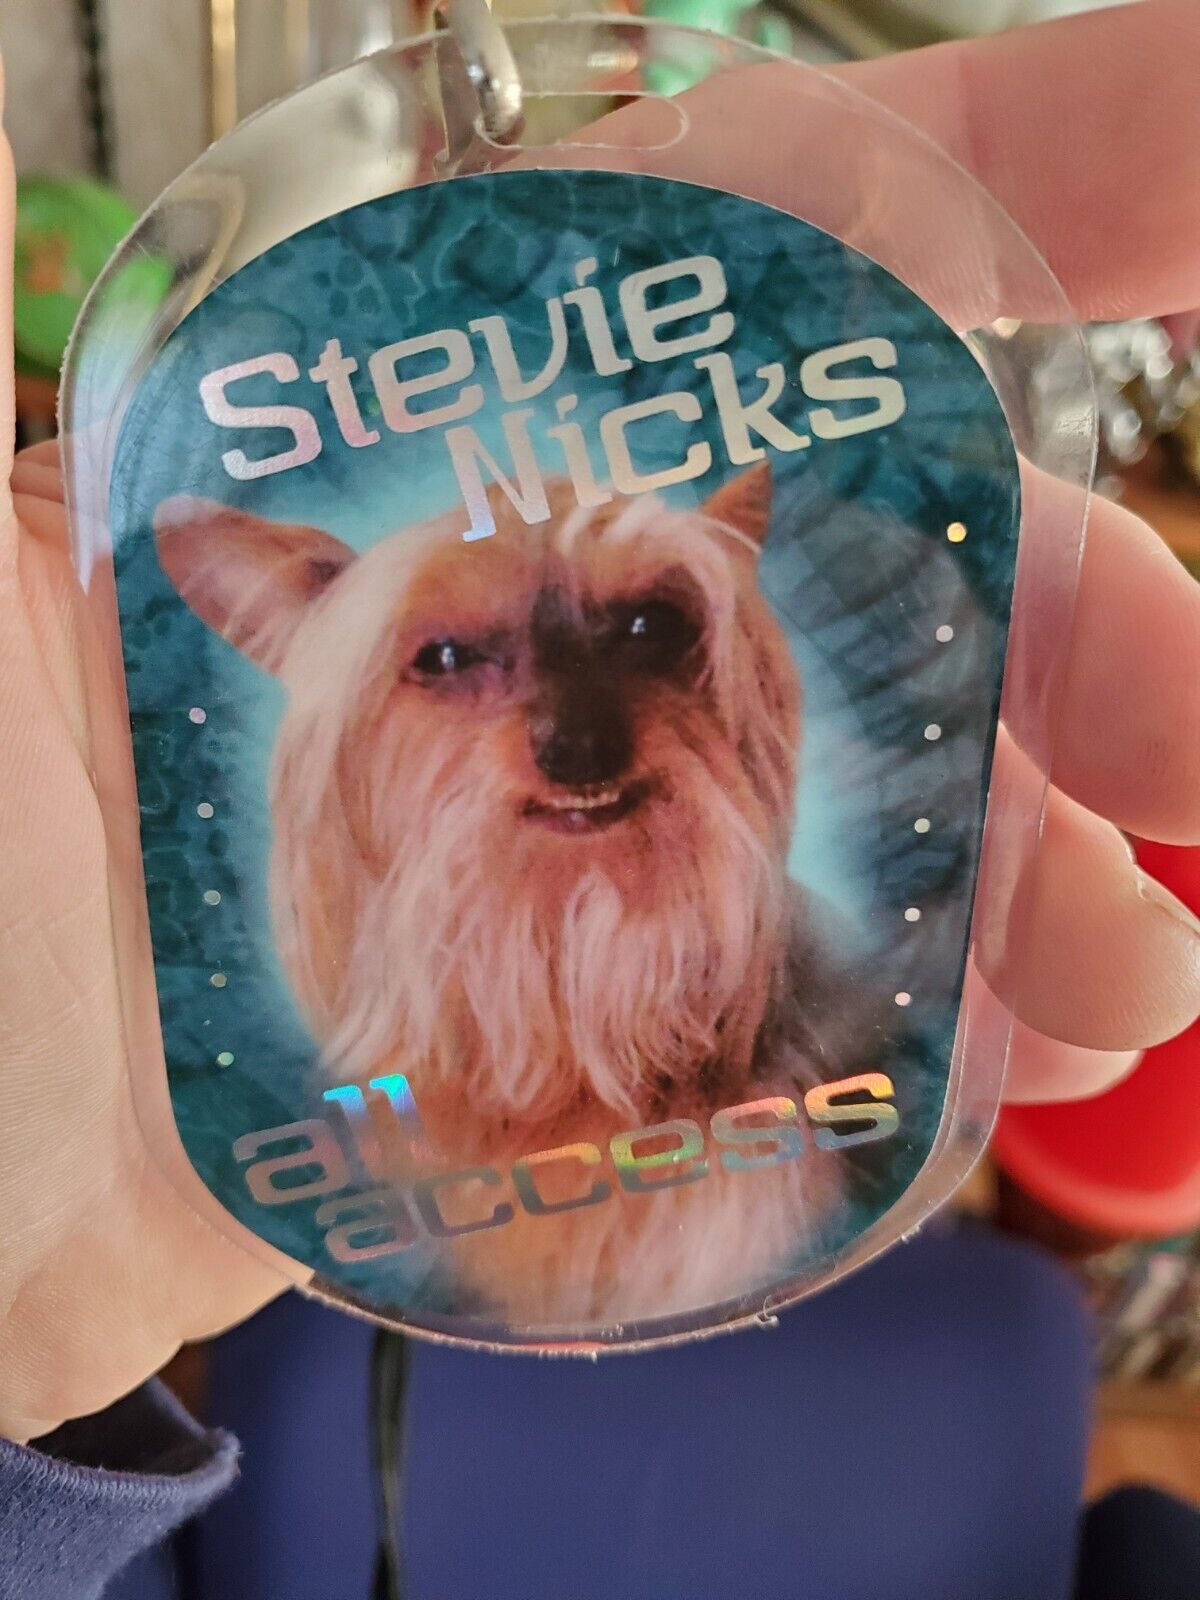 STEVIE NICKS ALL ACCESS Backstage PASS LAMINATE FOIL w/terrier dog SUPER CUTE